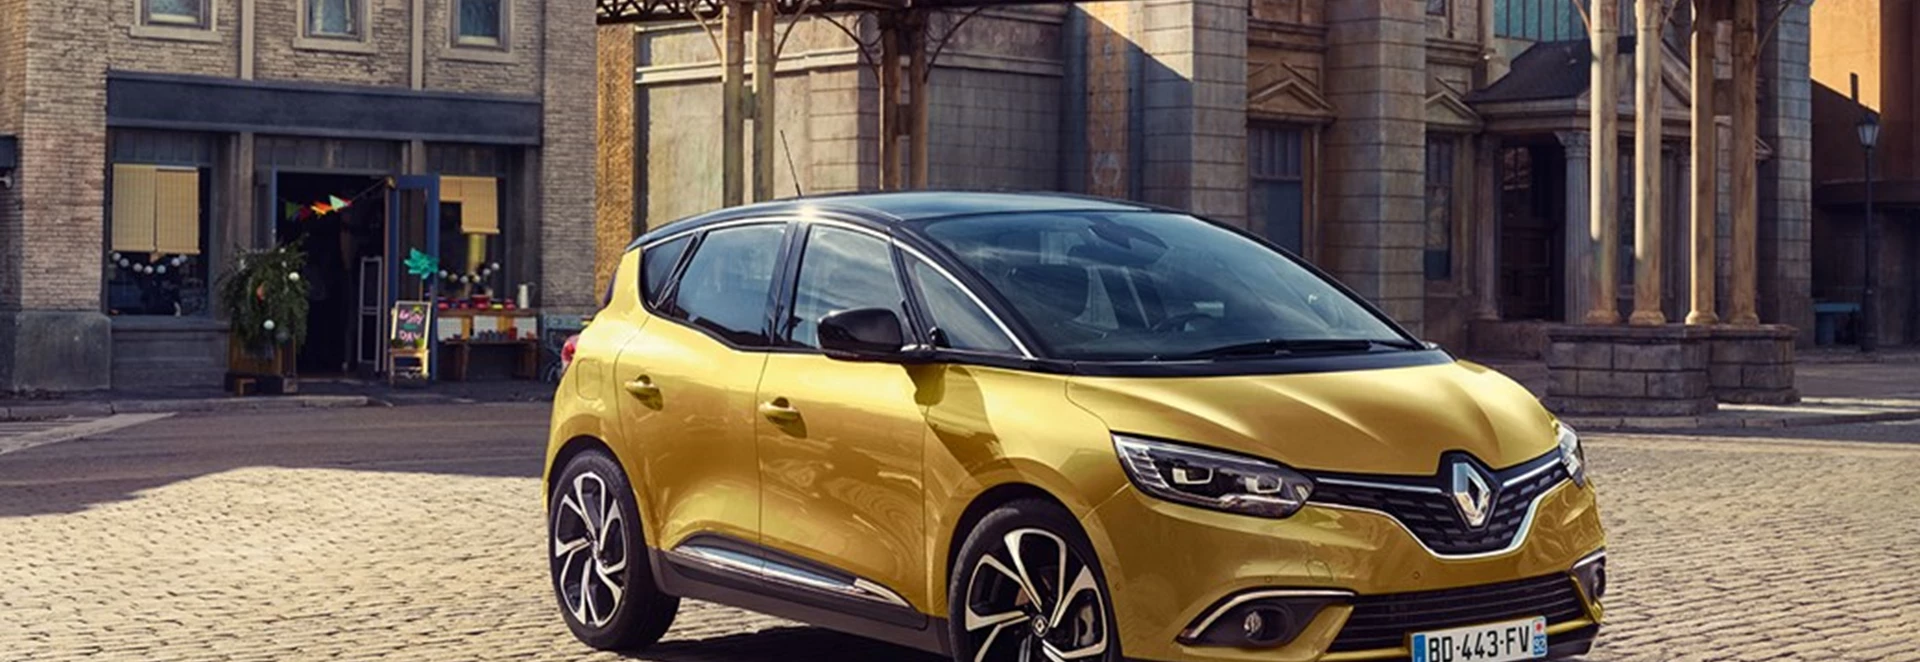 Renault previews new Scenic MPV